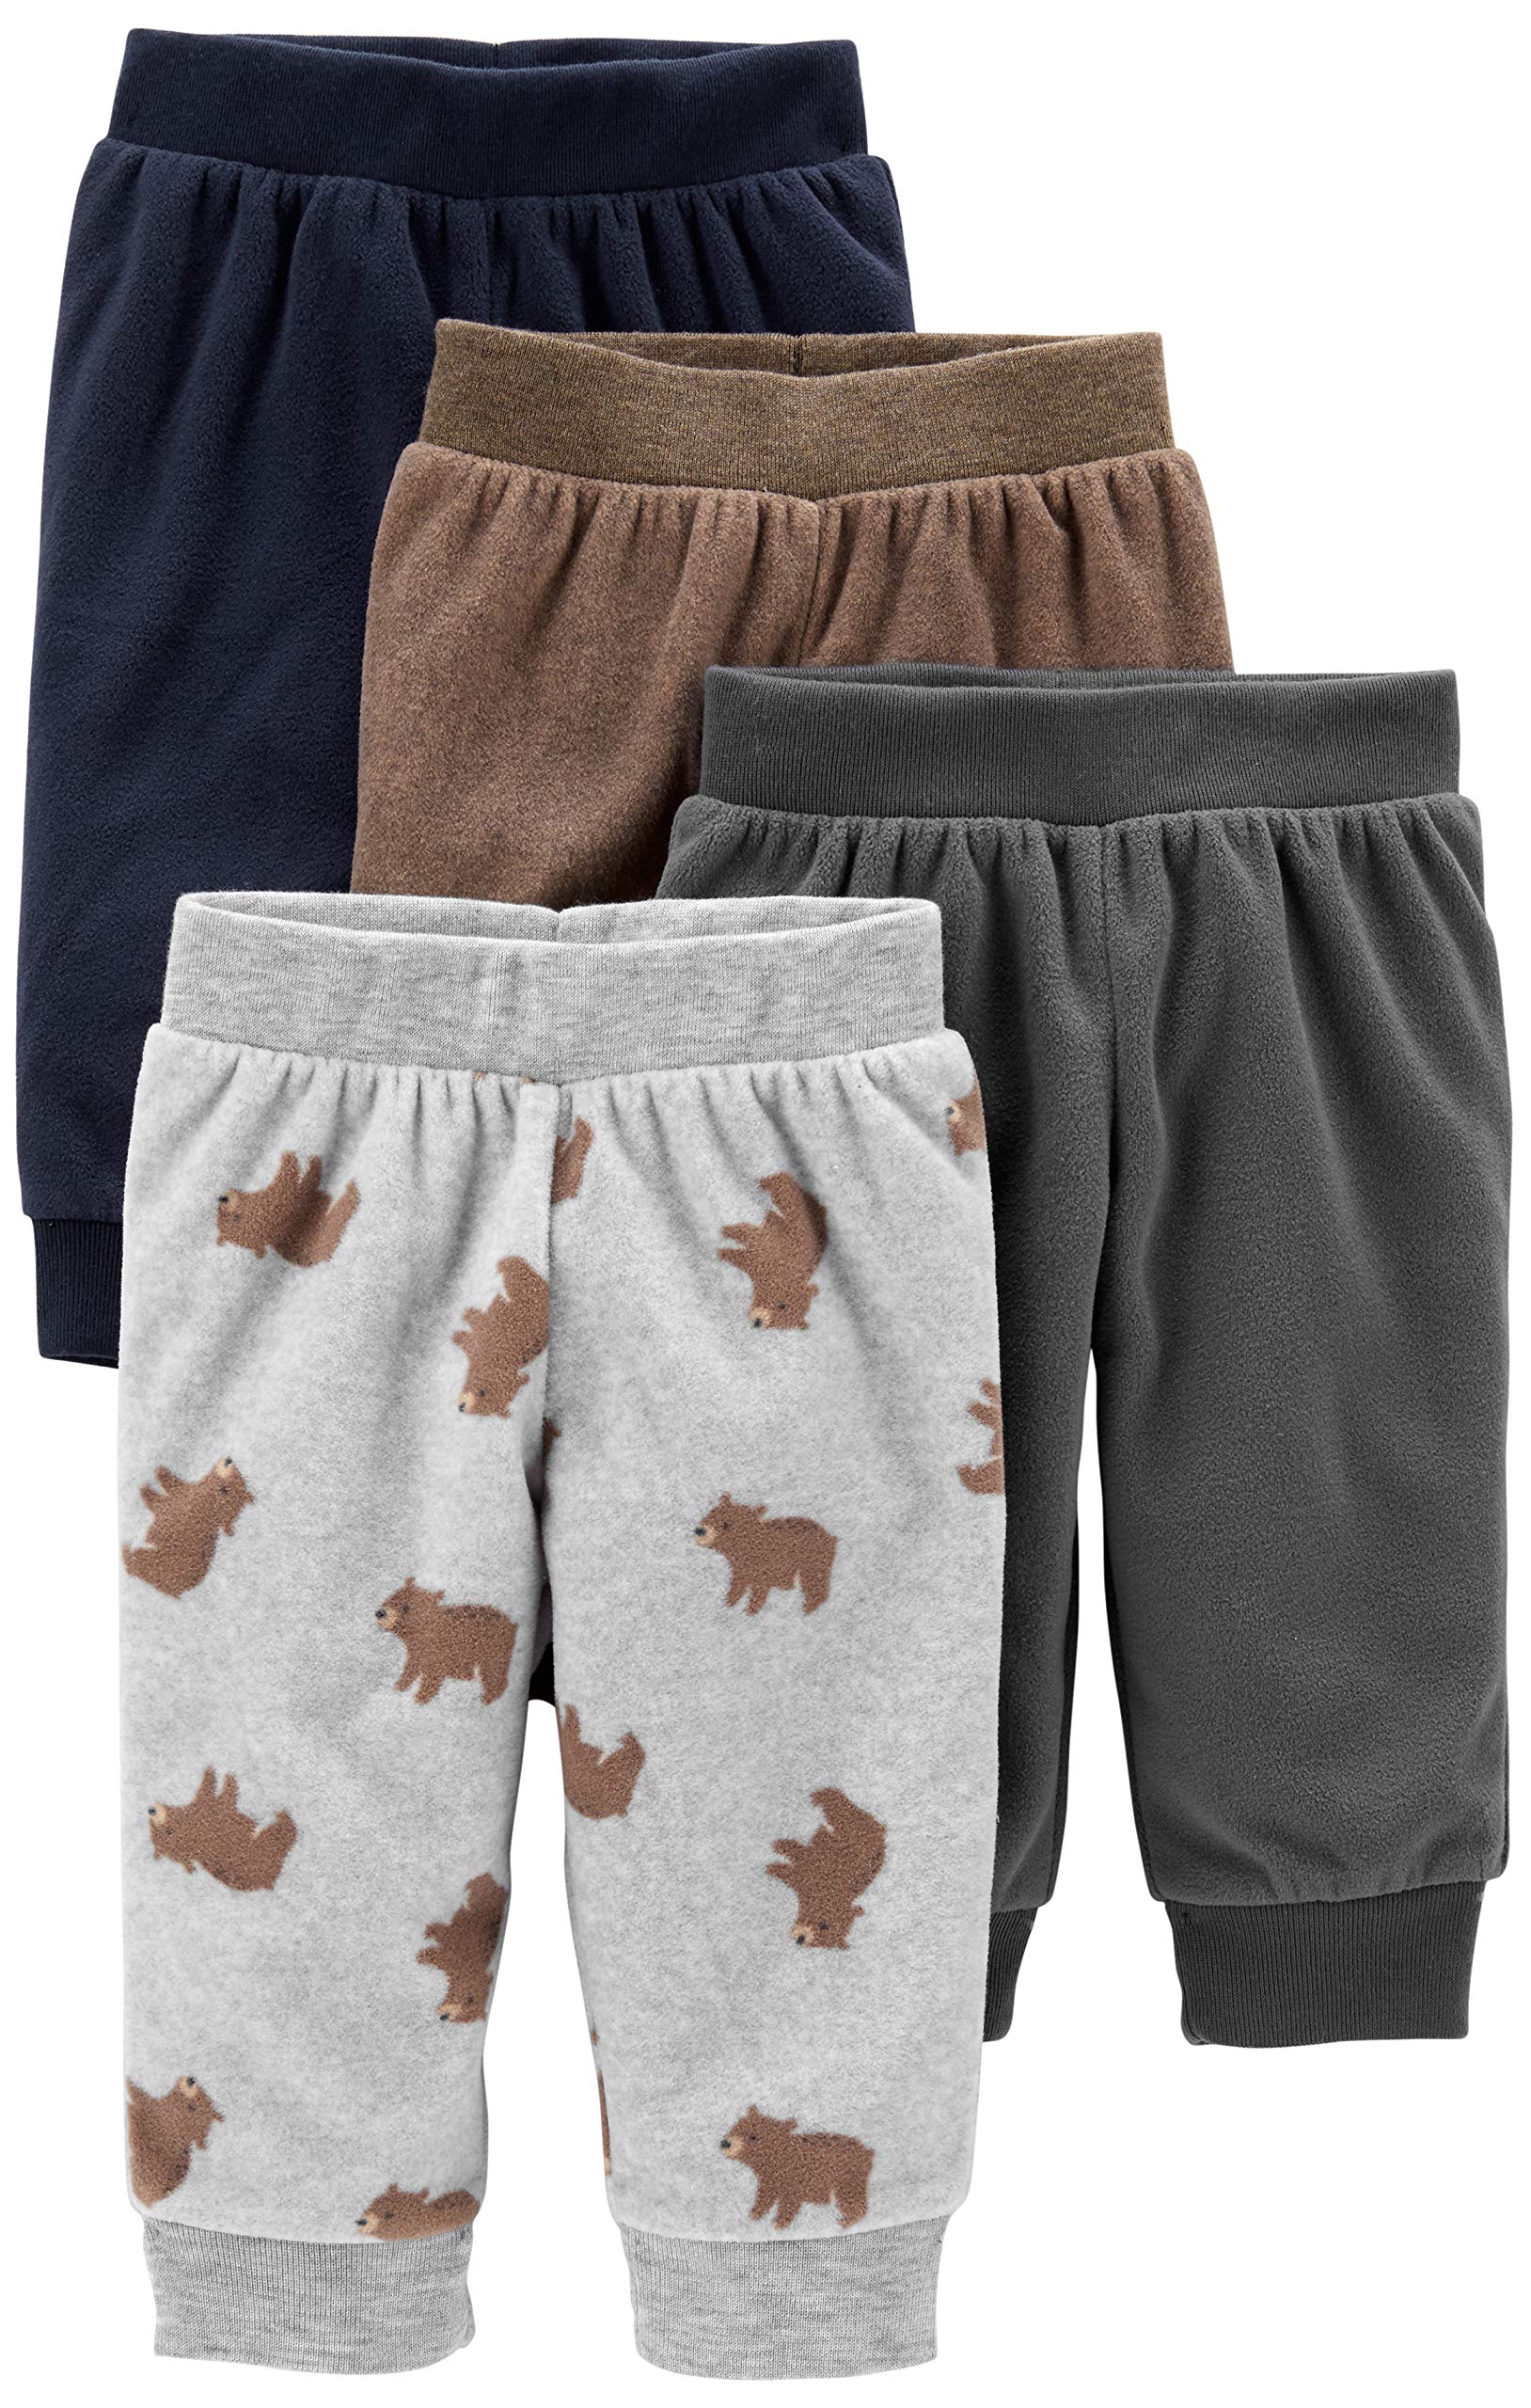 Simple Joys by Carter's Unisex Babies' Fleece Pants, Pack of 4